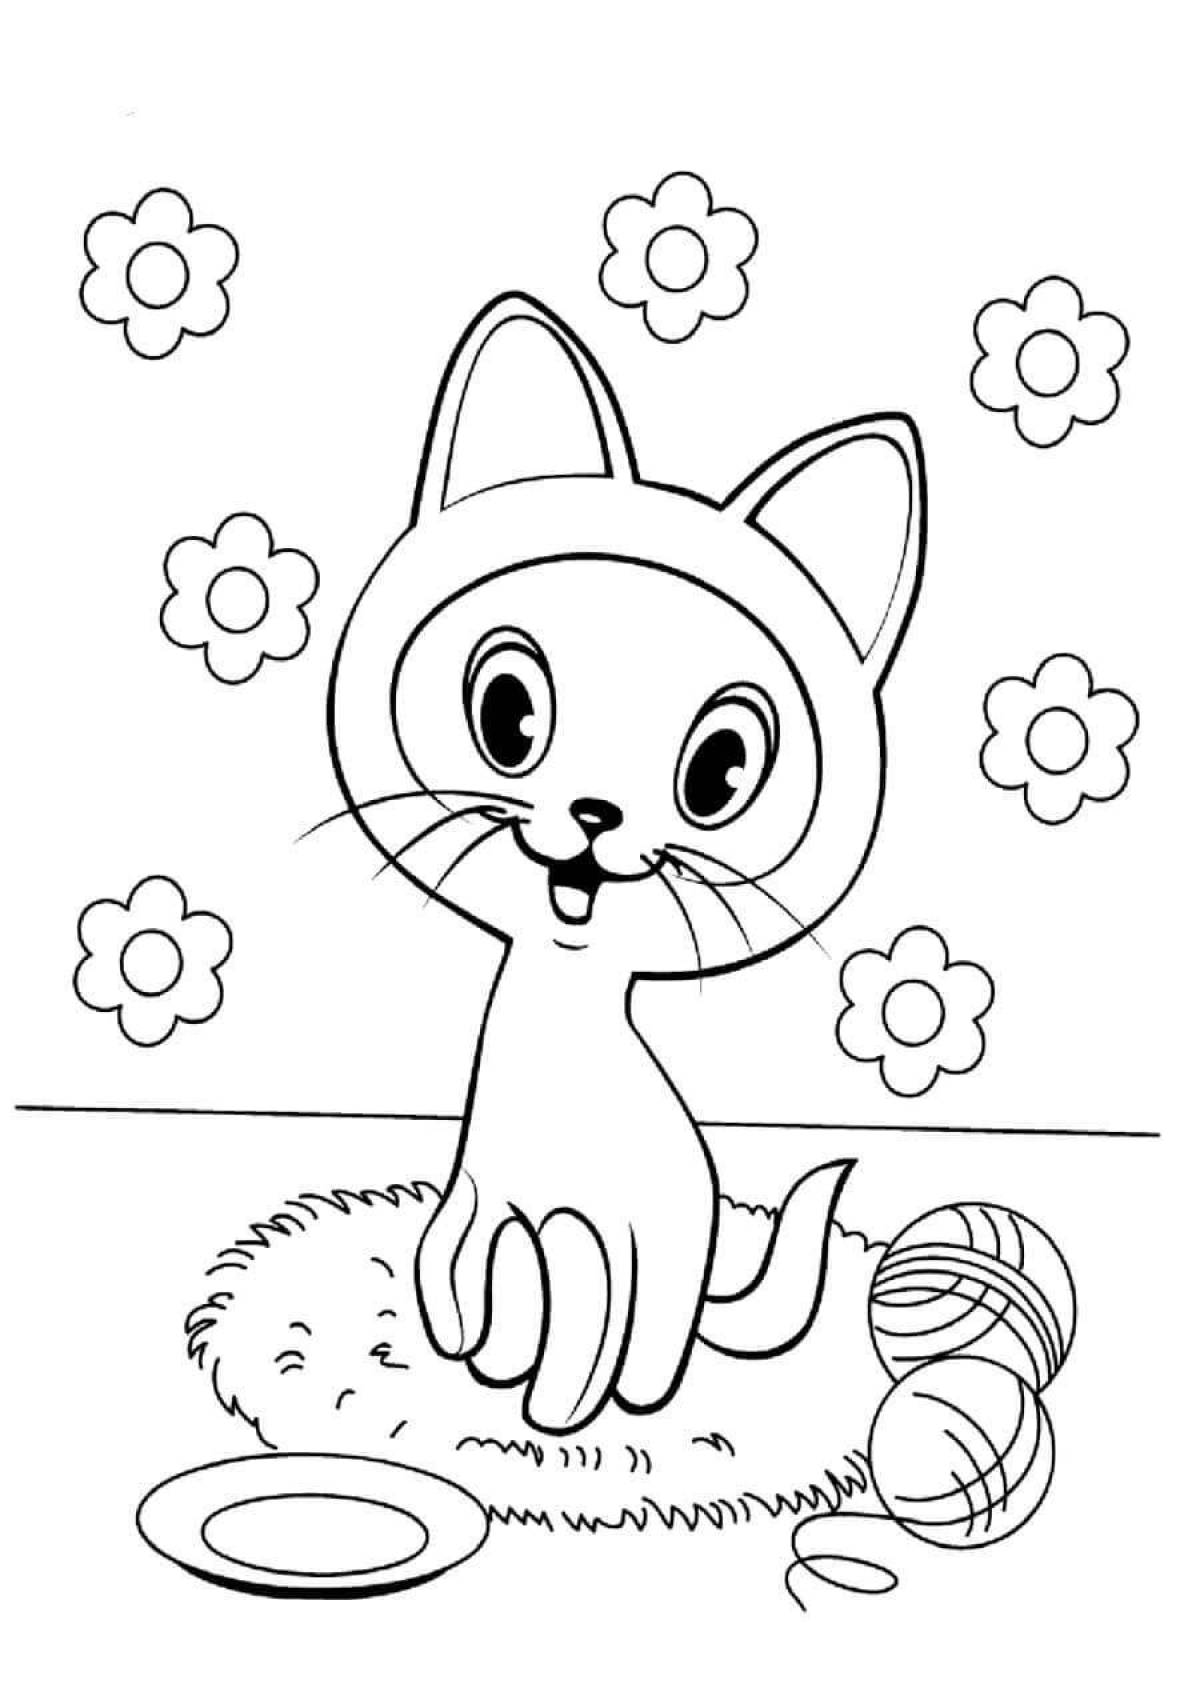 Curious kitten coloring book